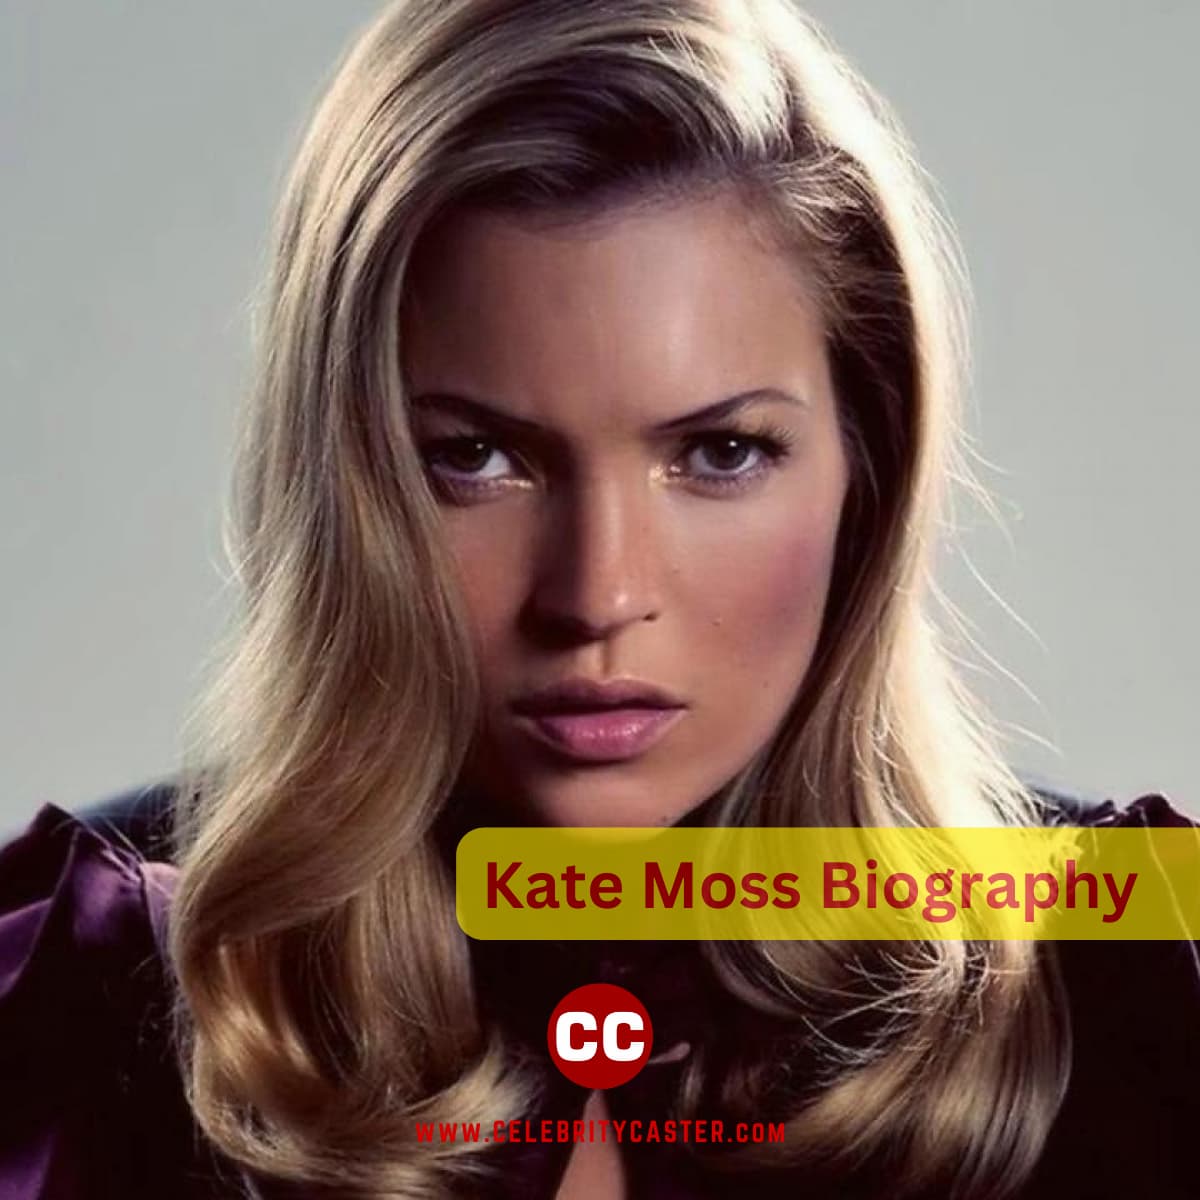 Kate Moss Biography